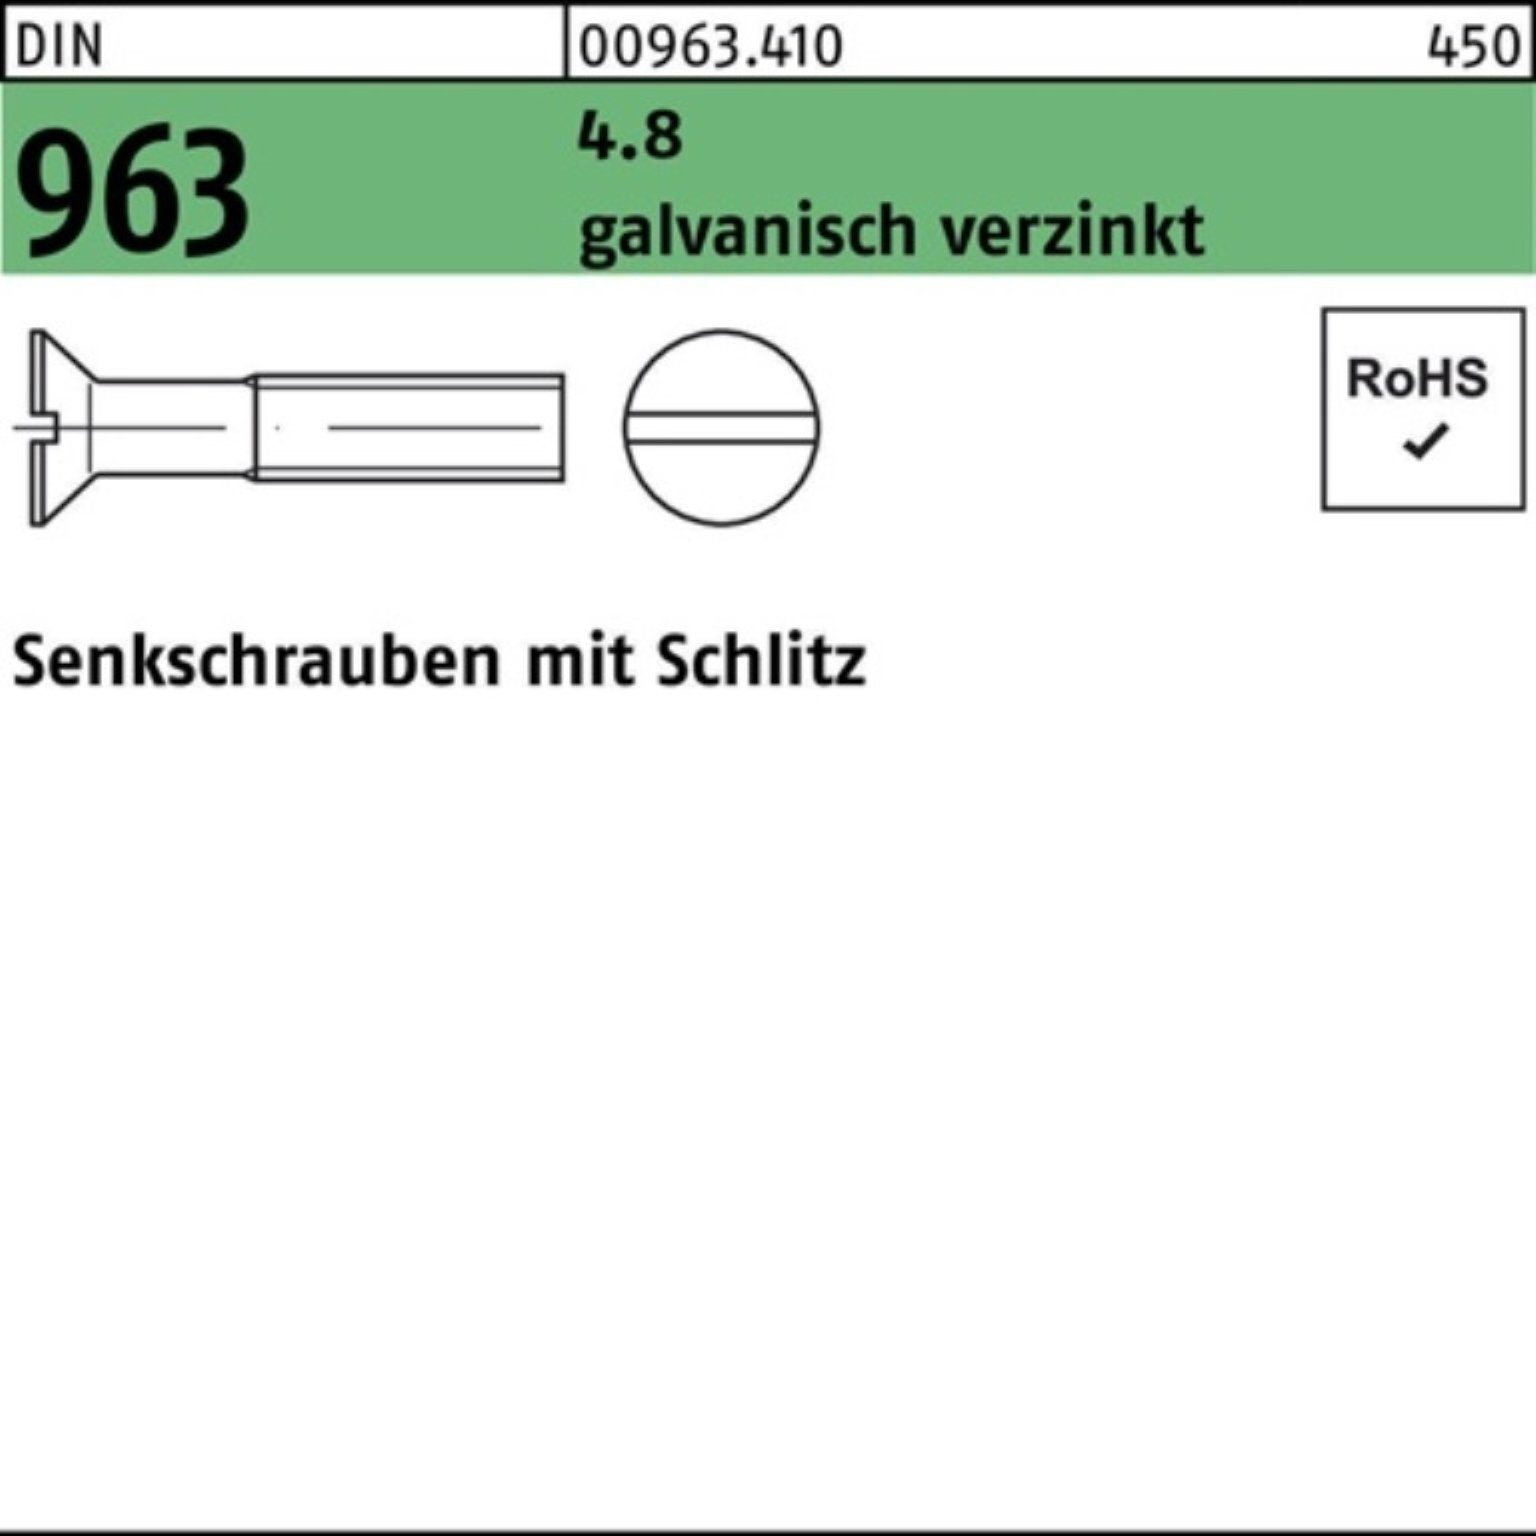 Reyher Senkschraube 100er Pack Senkschraube DIN 963 Schlitz M8x 70 4.8 galv.verz. 100 Stü